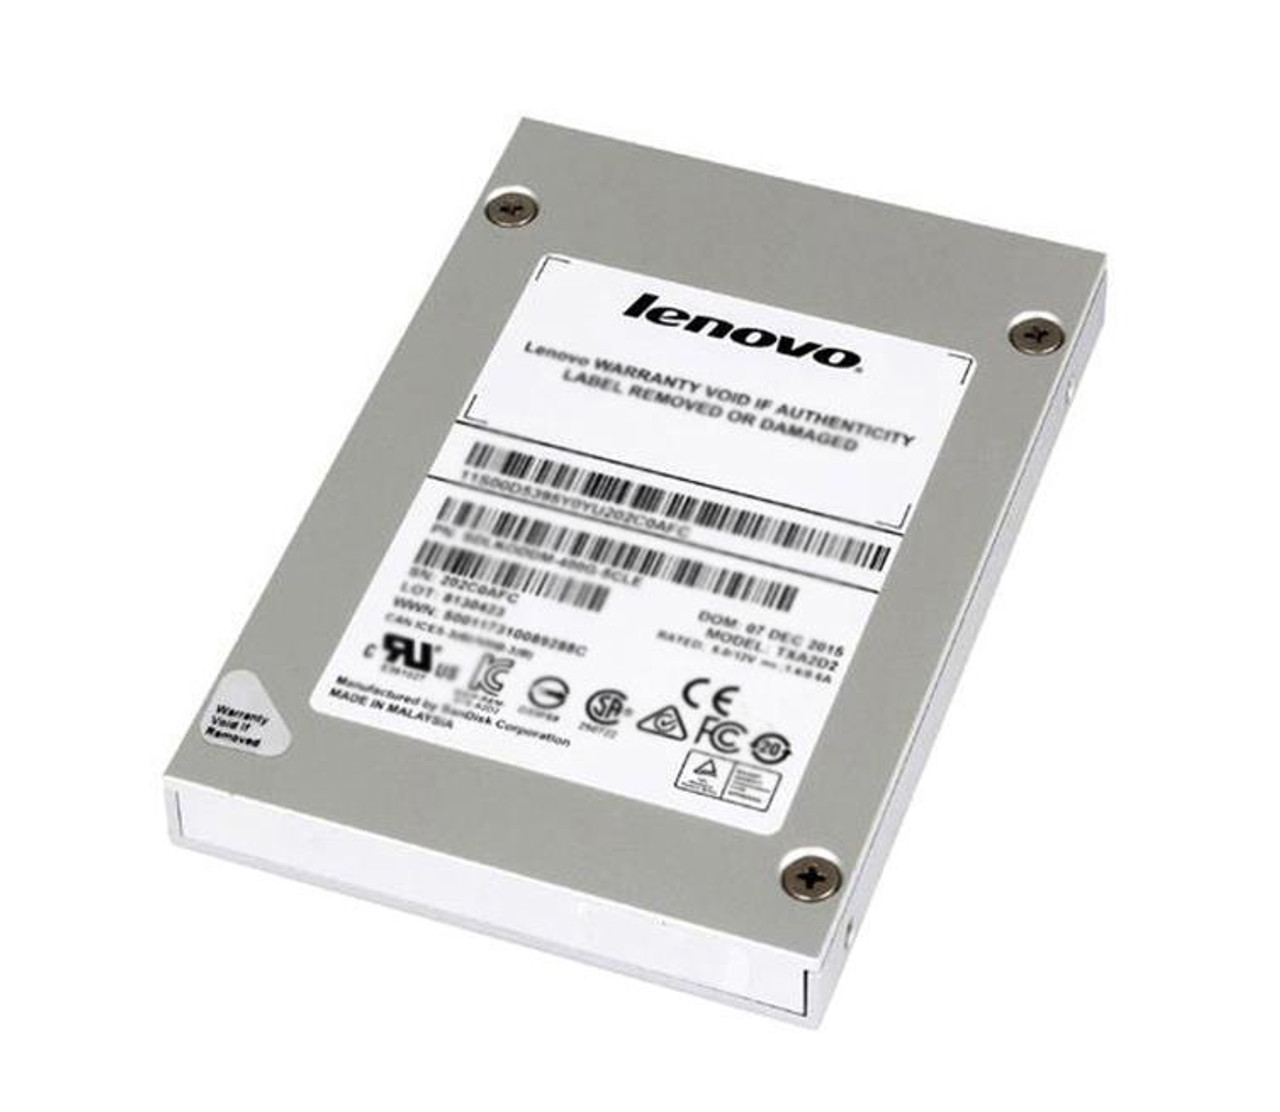 01EN021 Lenovo 480GB MLC SATA 6Gbps 2.5-inch Internal Solid State Drive (SSD)